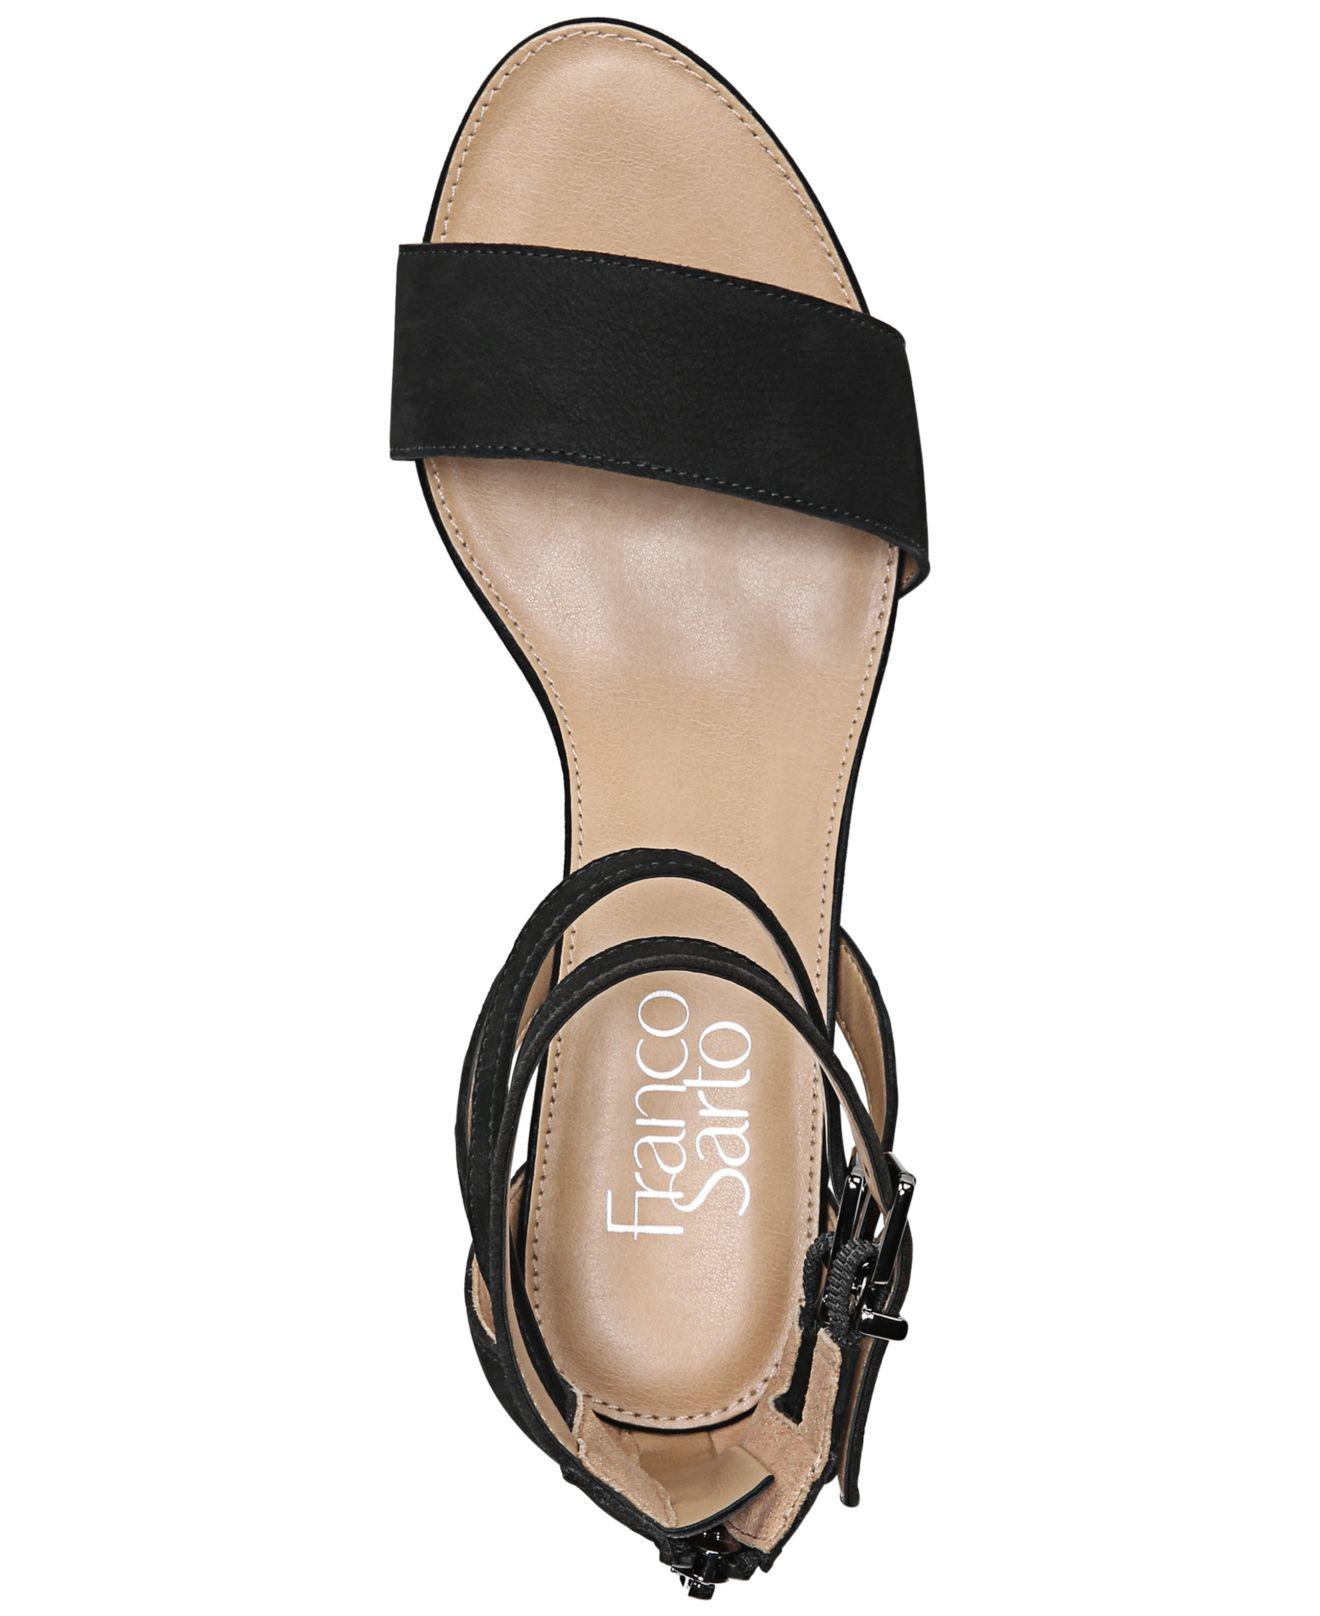 Franco Sarto Danissa Leather Wedge Sandals in Black - Lyst